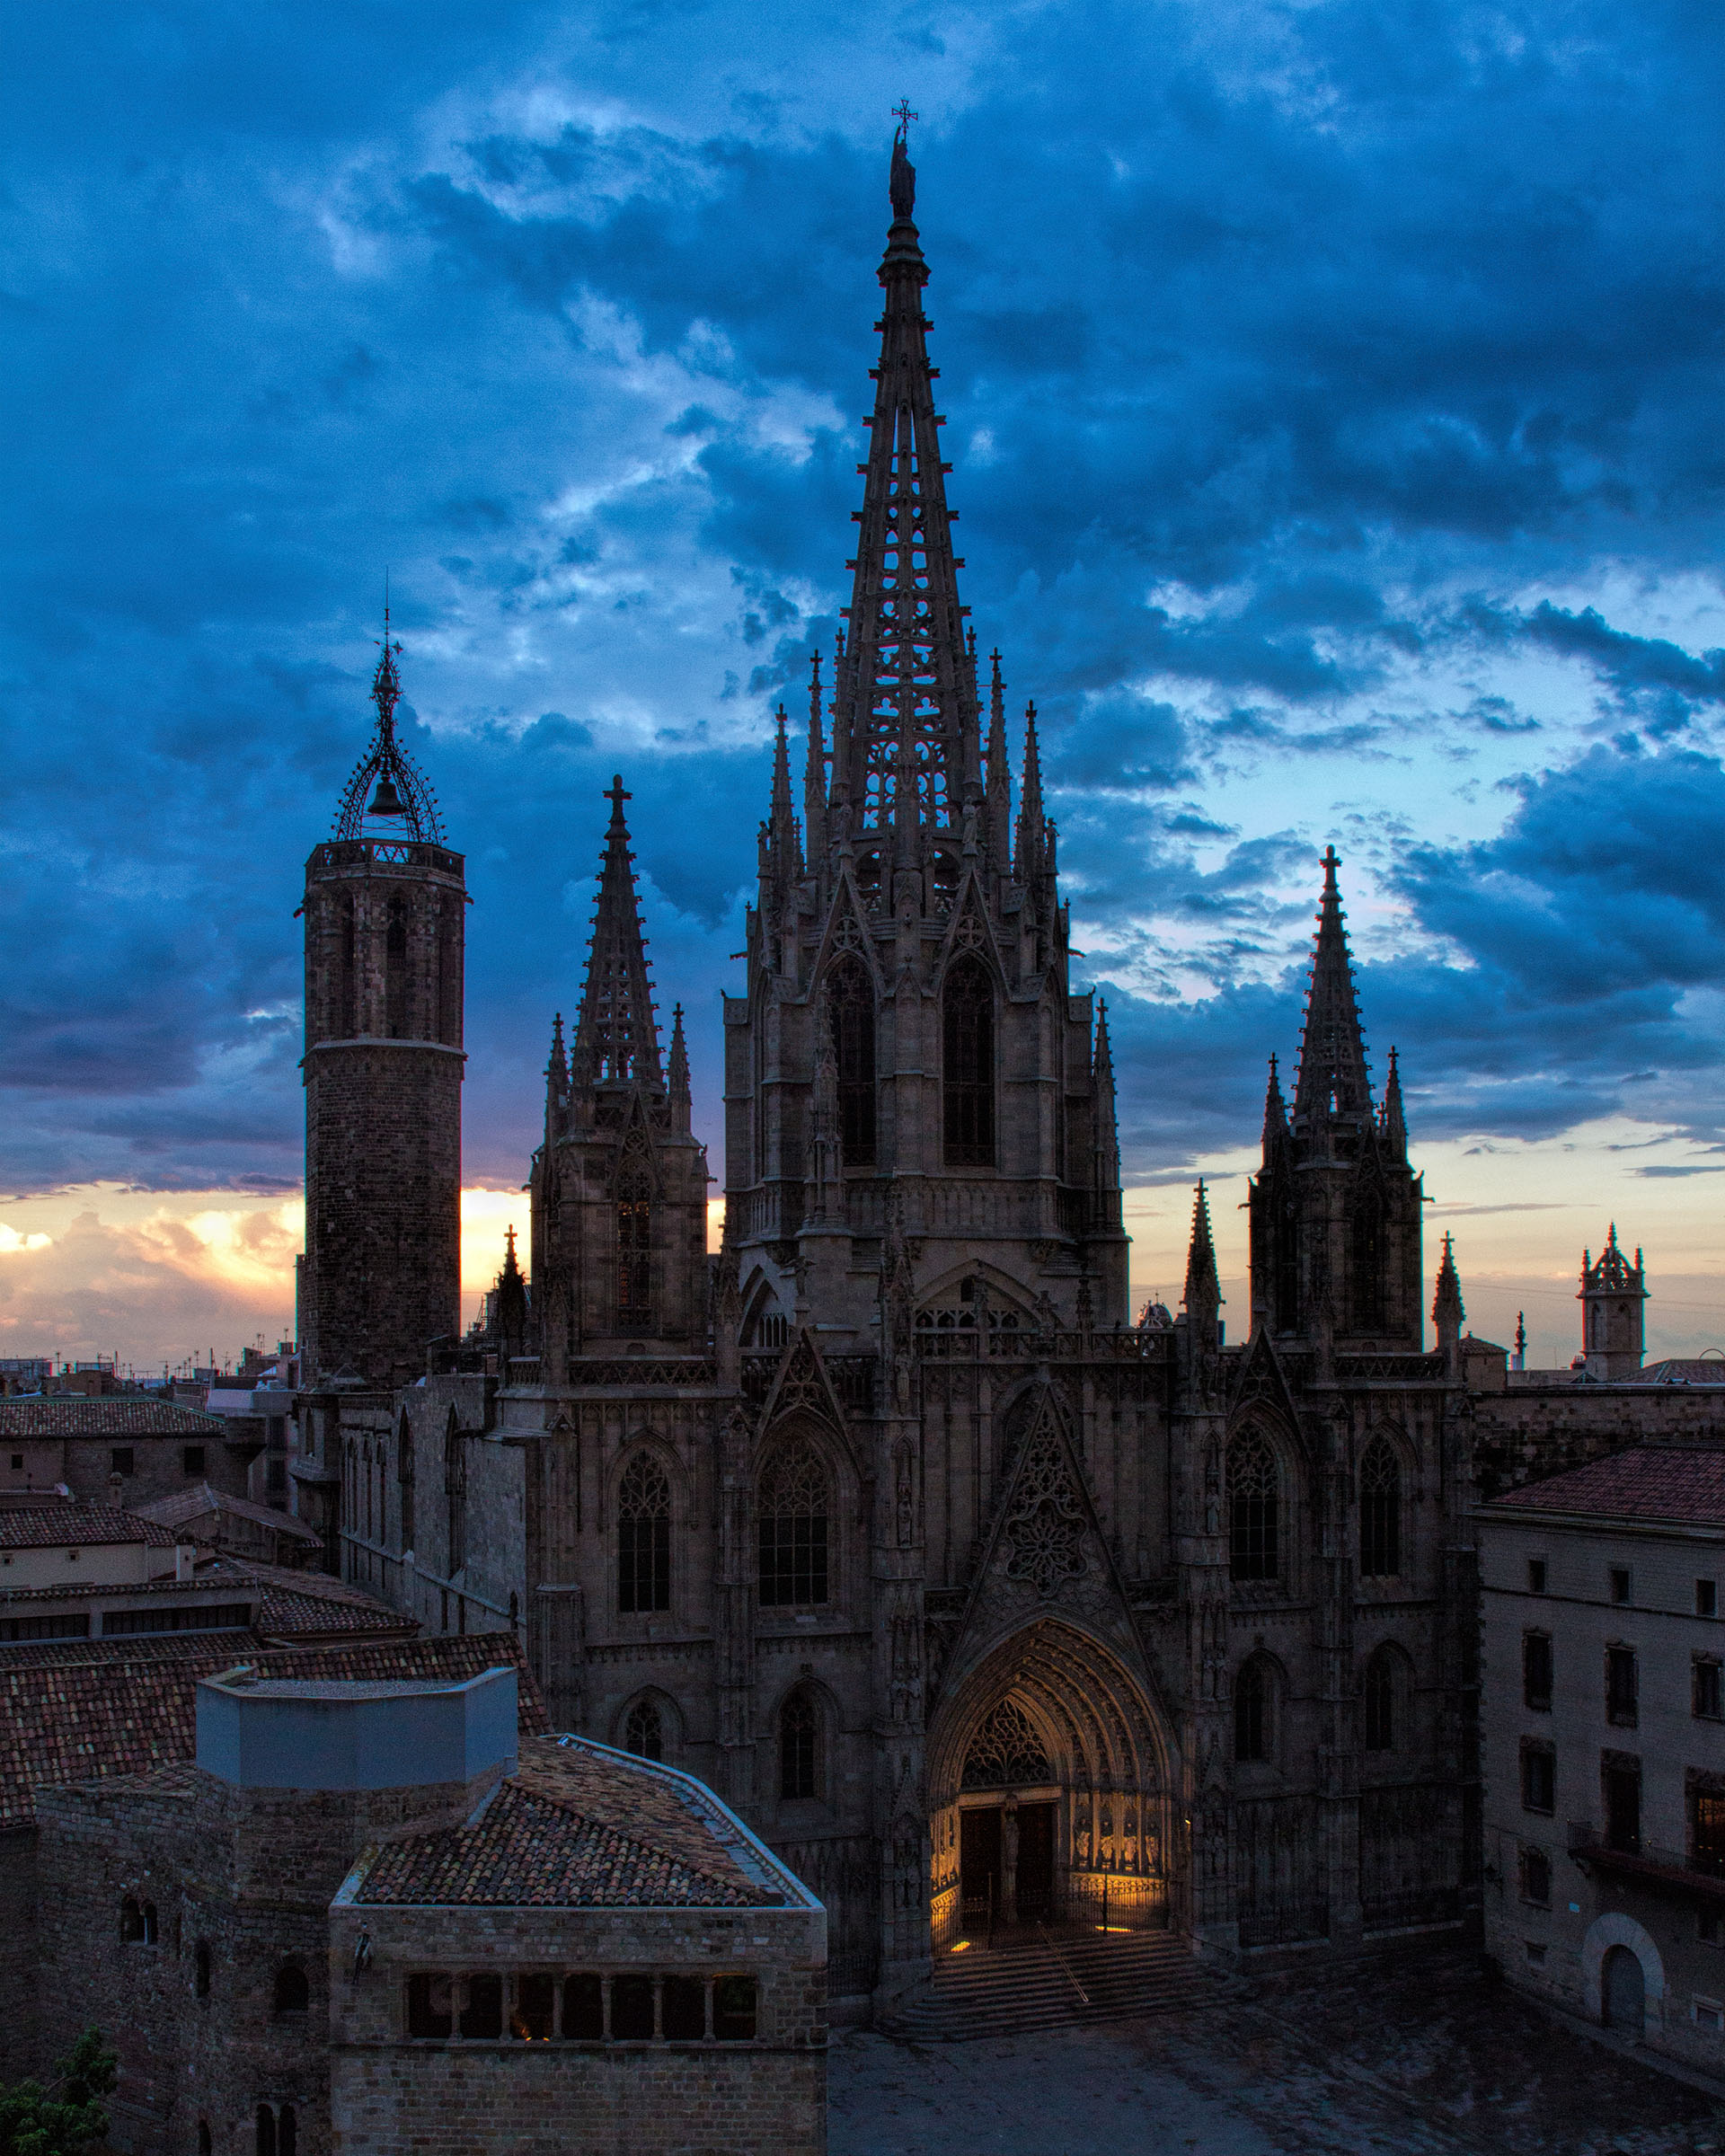 Barcelona cathedra, barri gotic photo